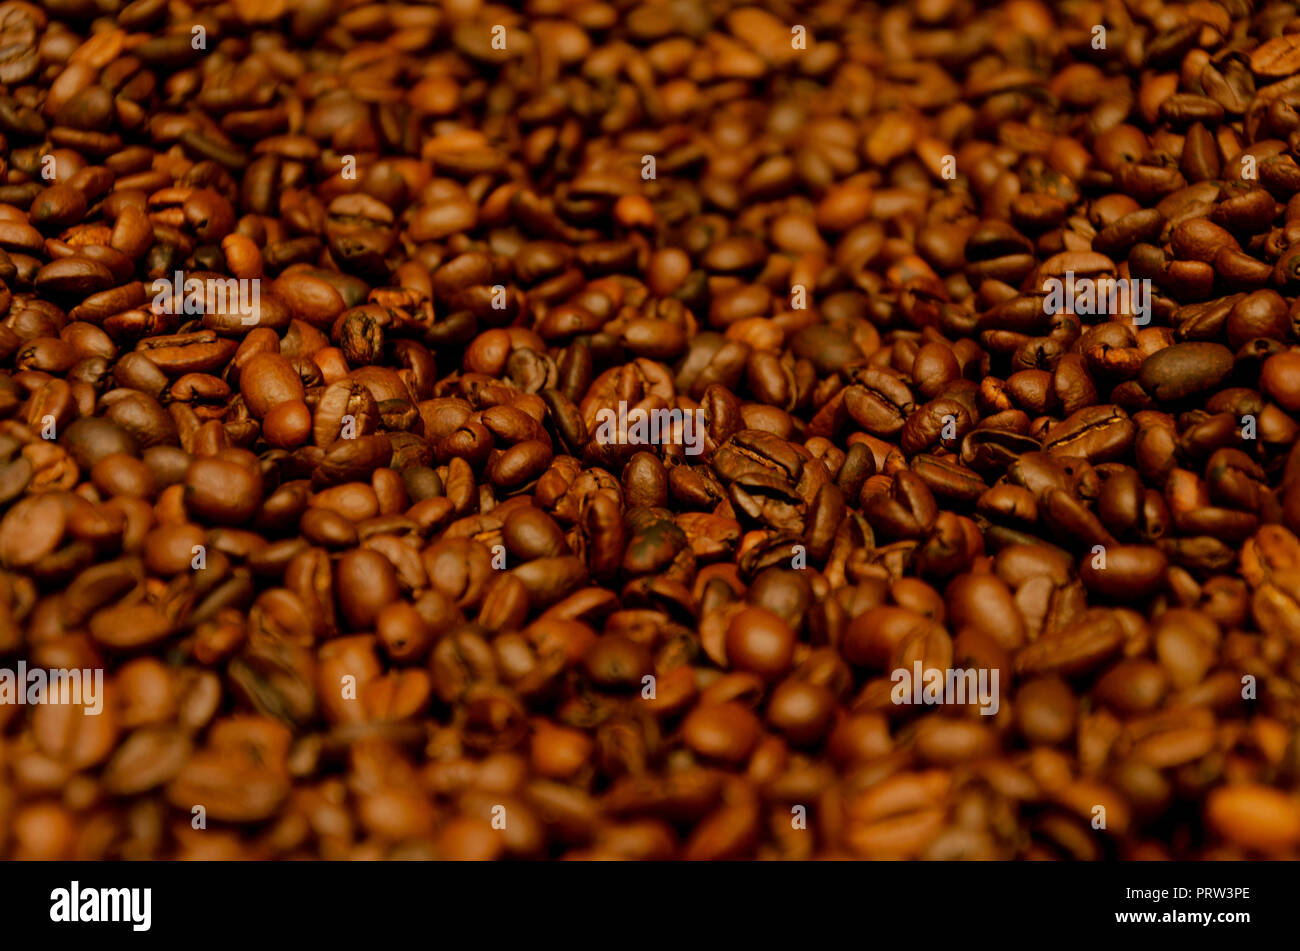 Farbenfrohe Kaffee Bohnen Hintergrund, netten Fokus Stockfoto